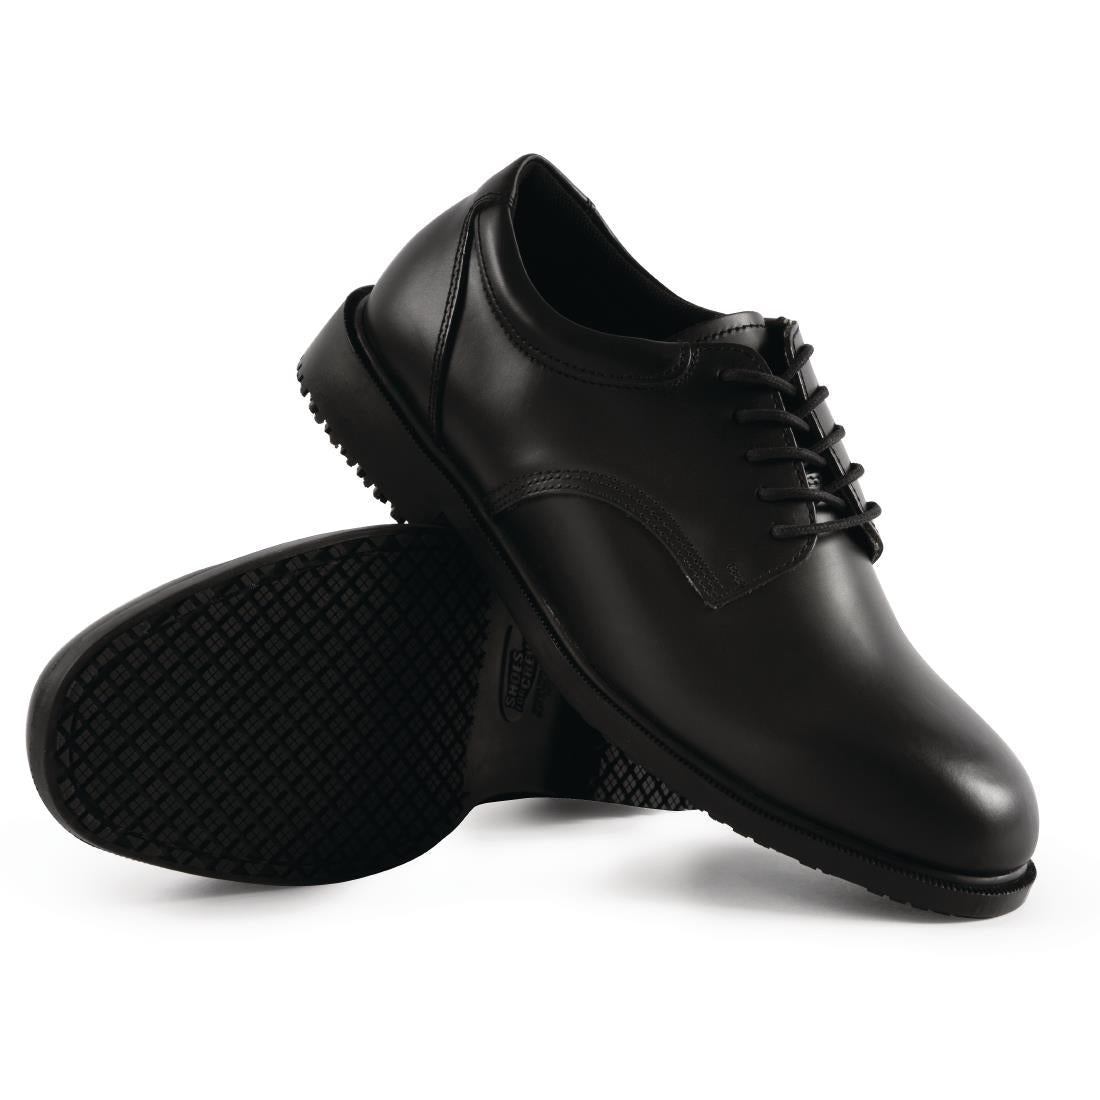 B110-40 Shoes For Crews Mens Dress Shoe